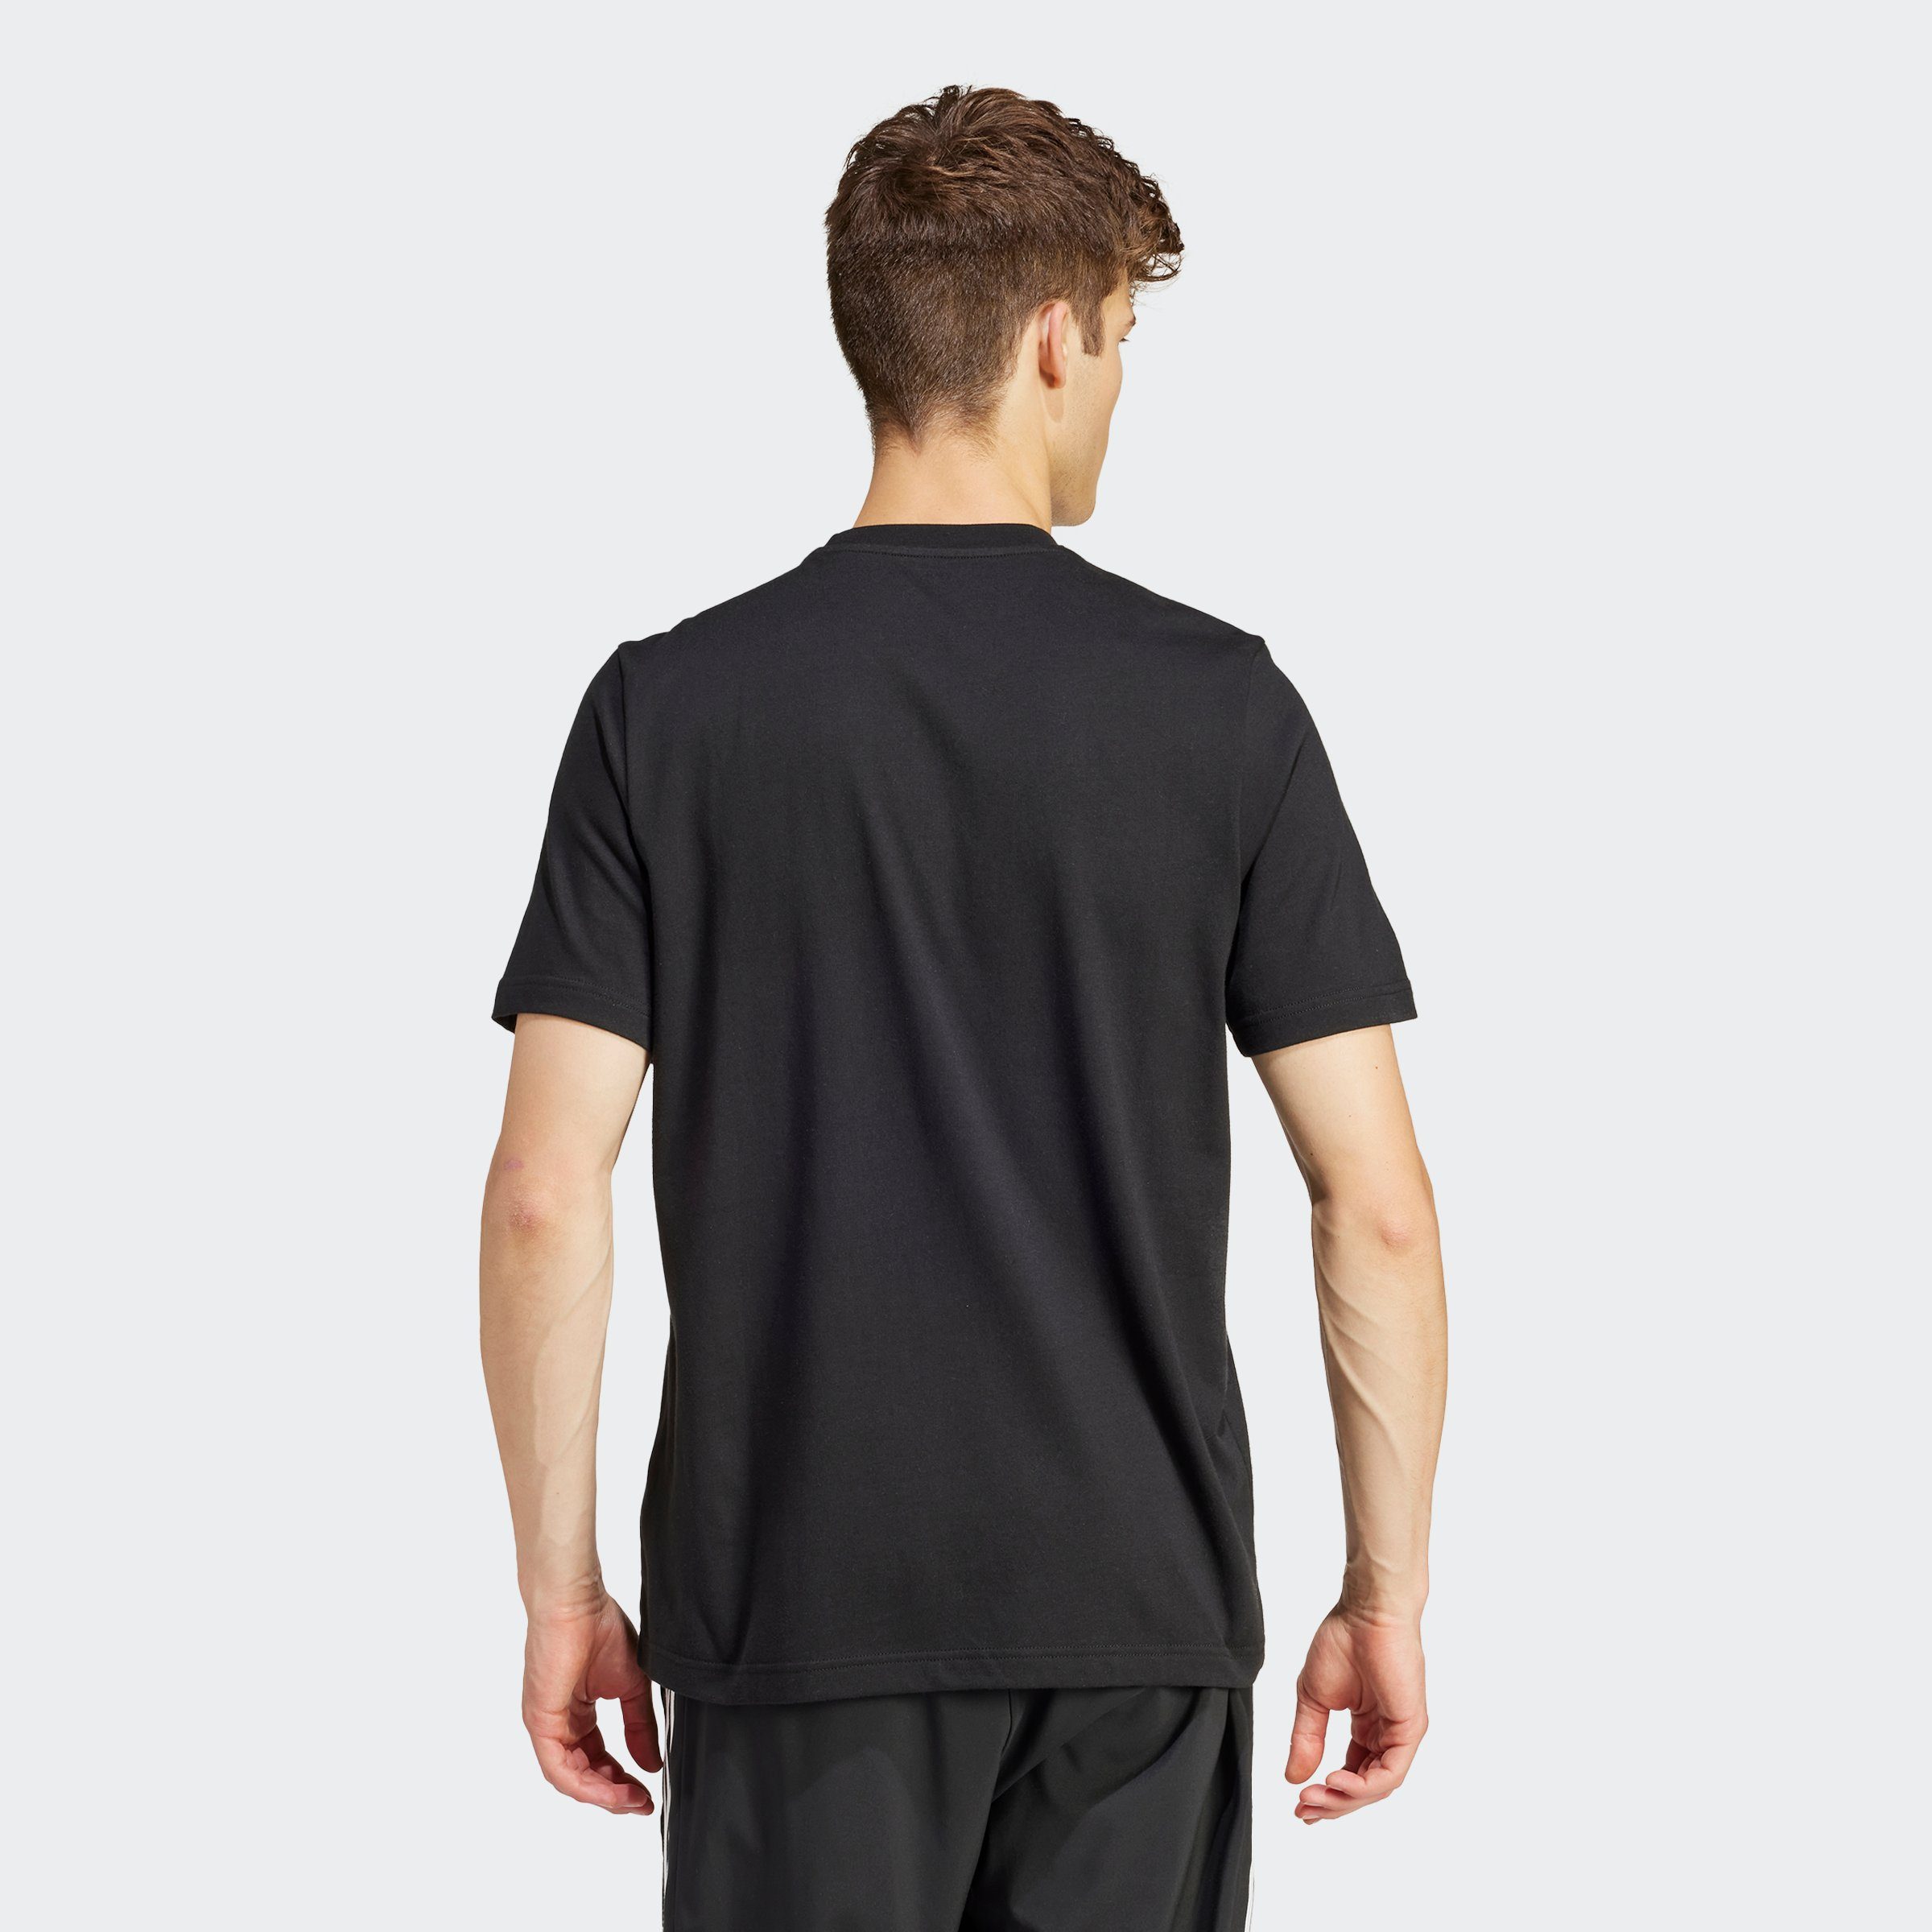 M LANDSCAPE T-Shirt BLACK Sportswear SPW adidas